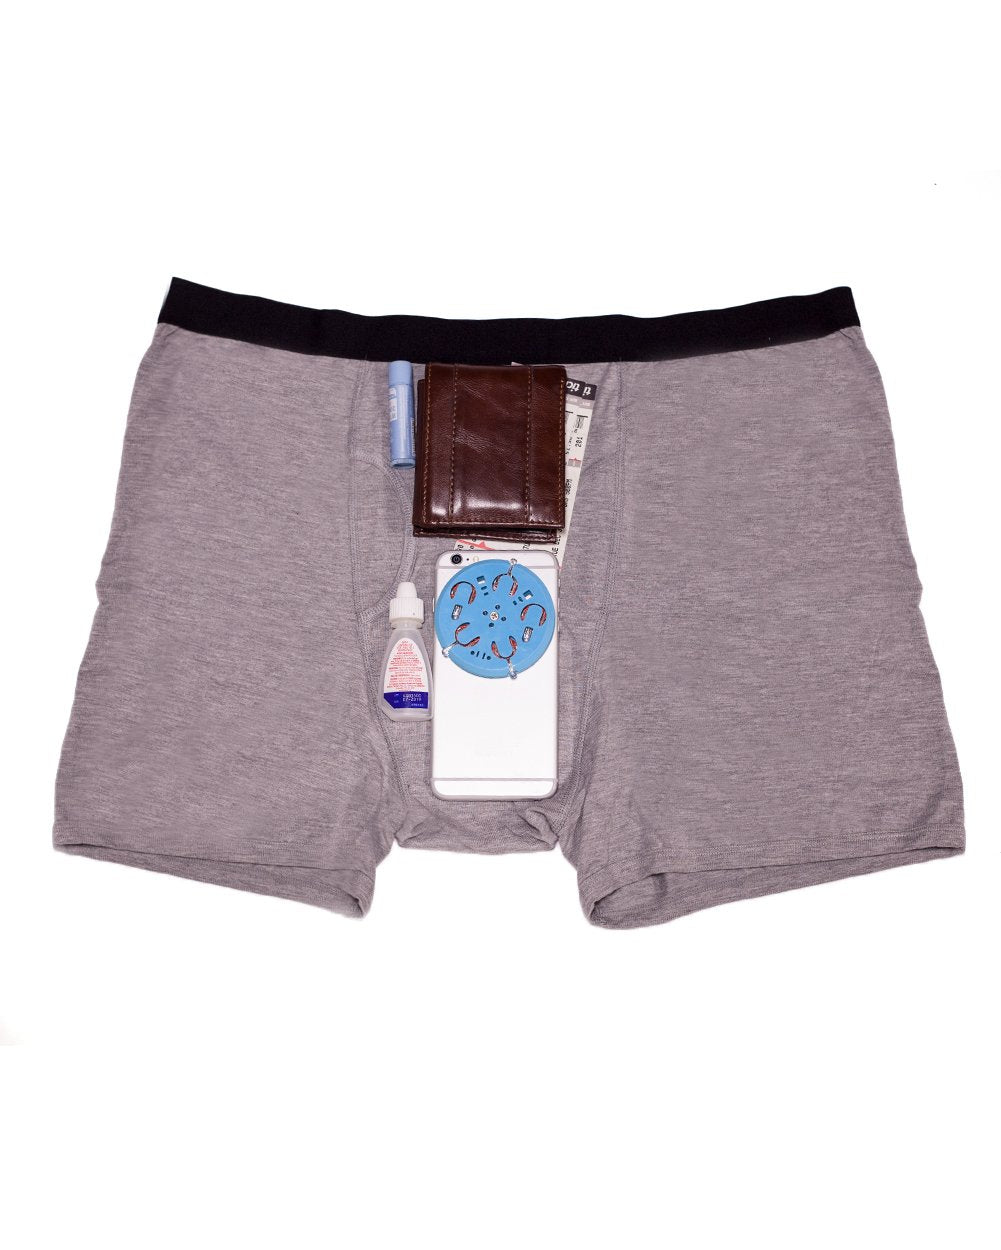 Men's Underwear with A Secret Front Stash Pocket Panties, Small